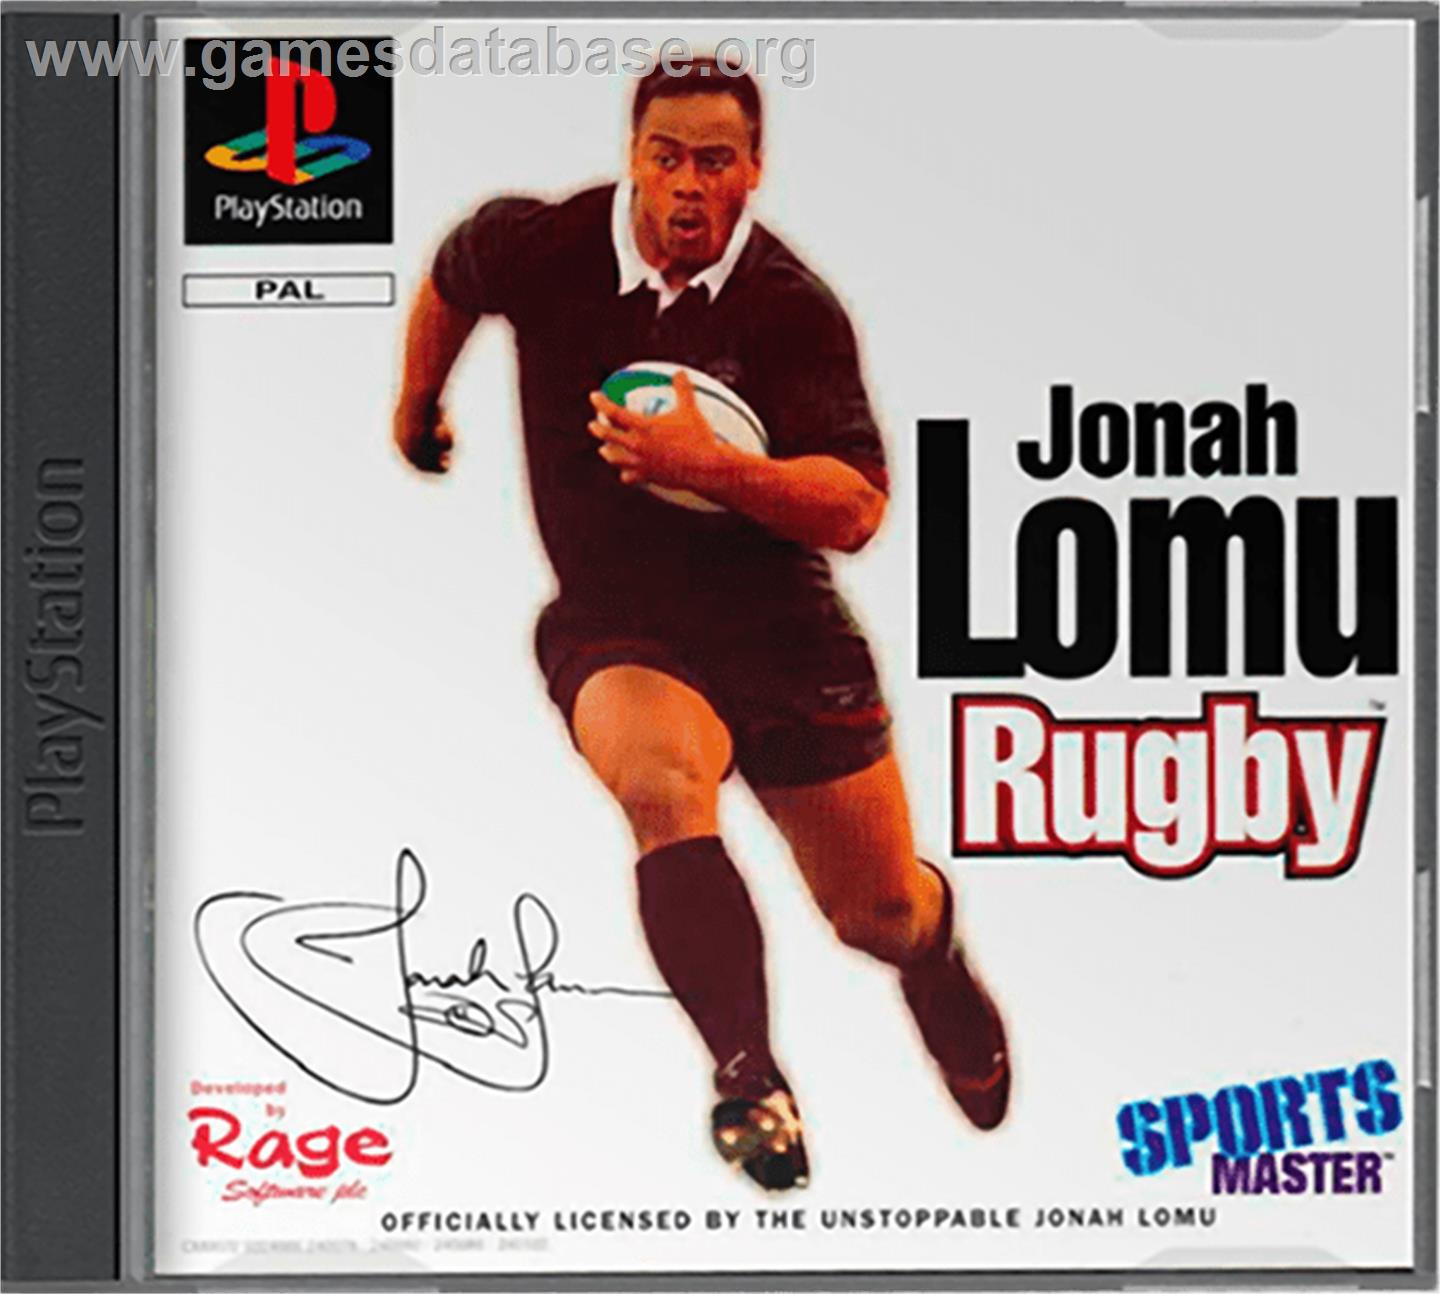 Jonah Lomu Rugby / Brian Lara Cricket - Sony Playstation - Artwork - Box